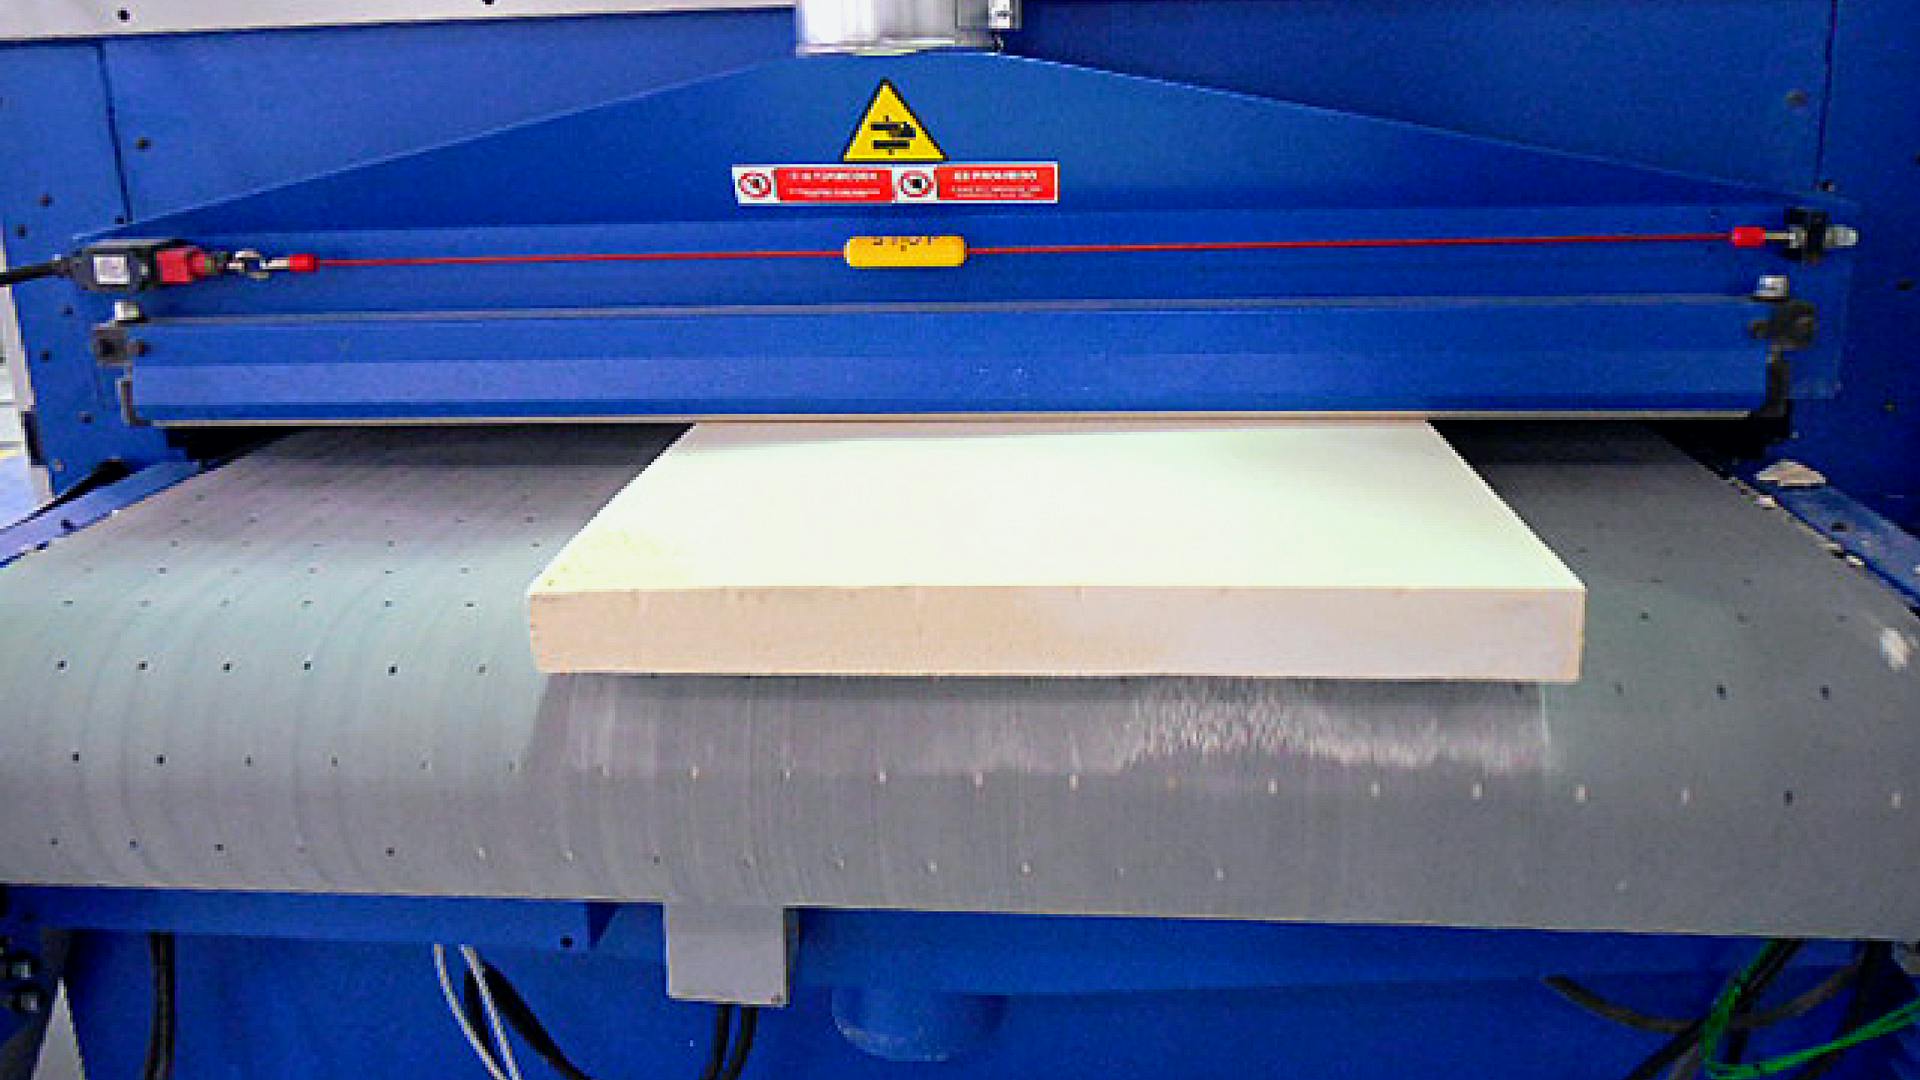 front-view-of-NUTEC-machine-producing-ceramic-fiber-insulation-boards